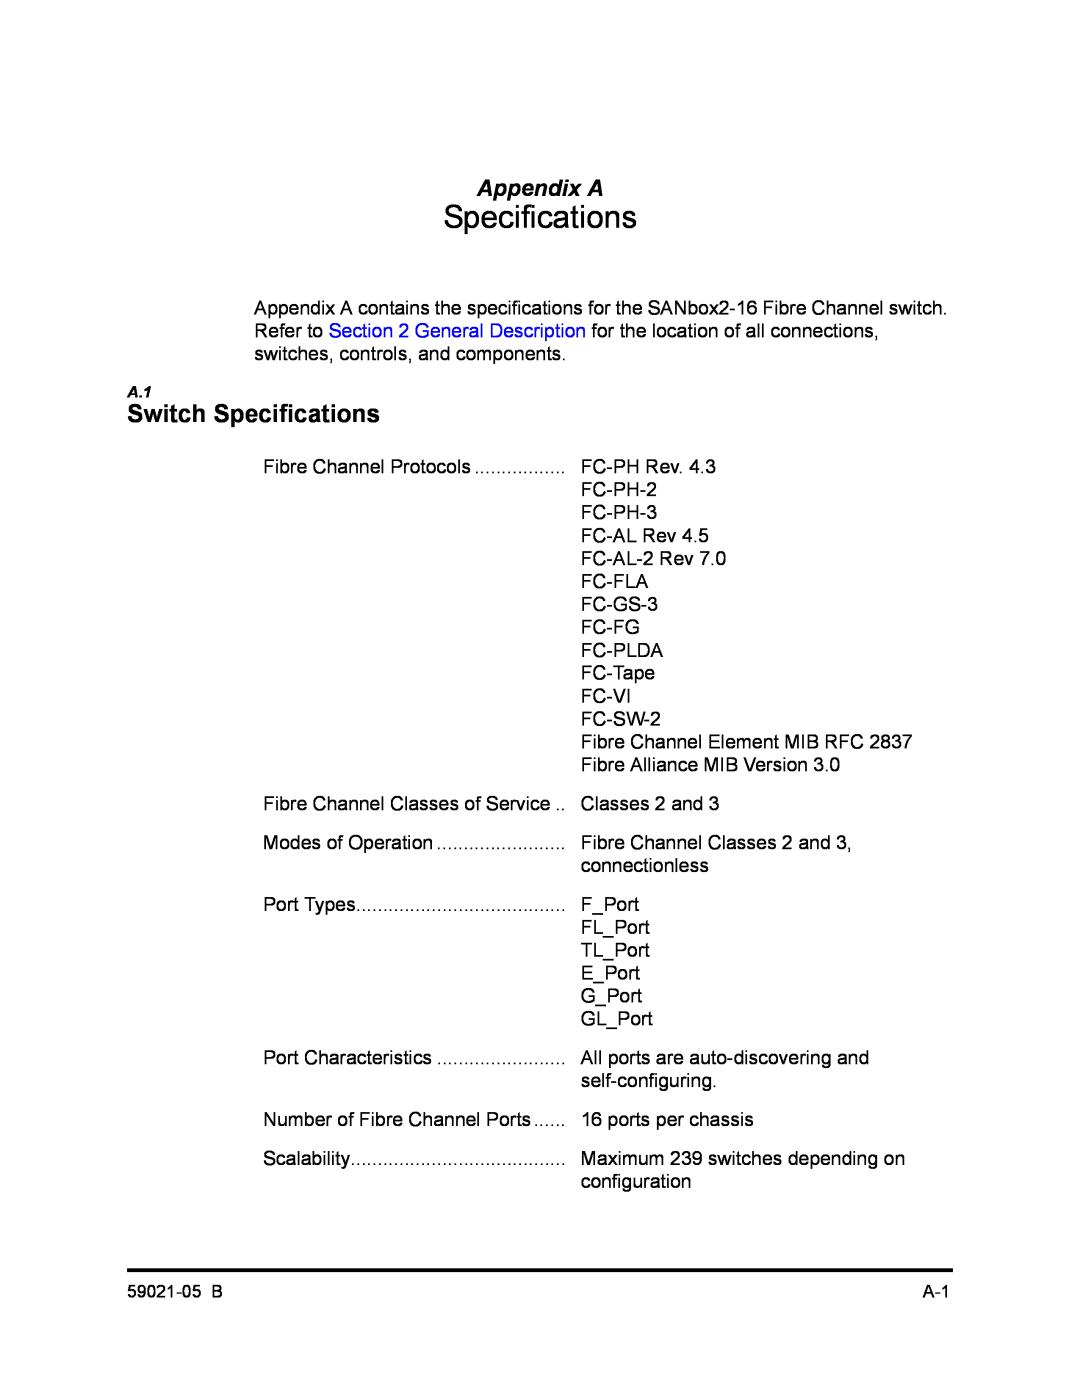 Q-Logic 59021-05 B manual Switch Specifications, Appendix A 